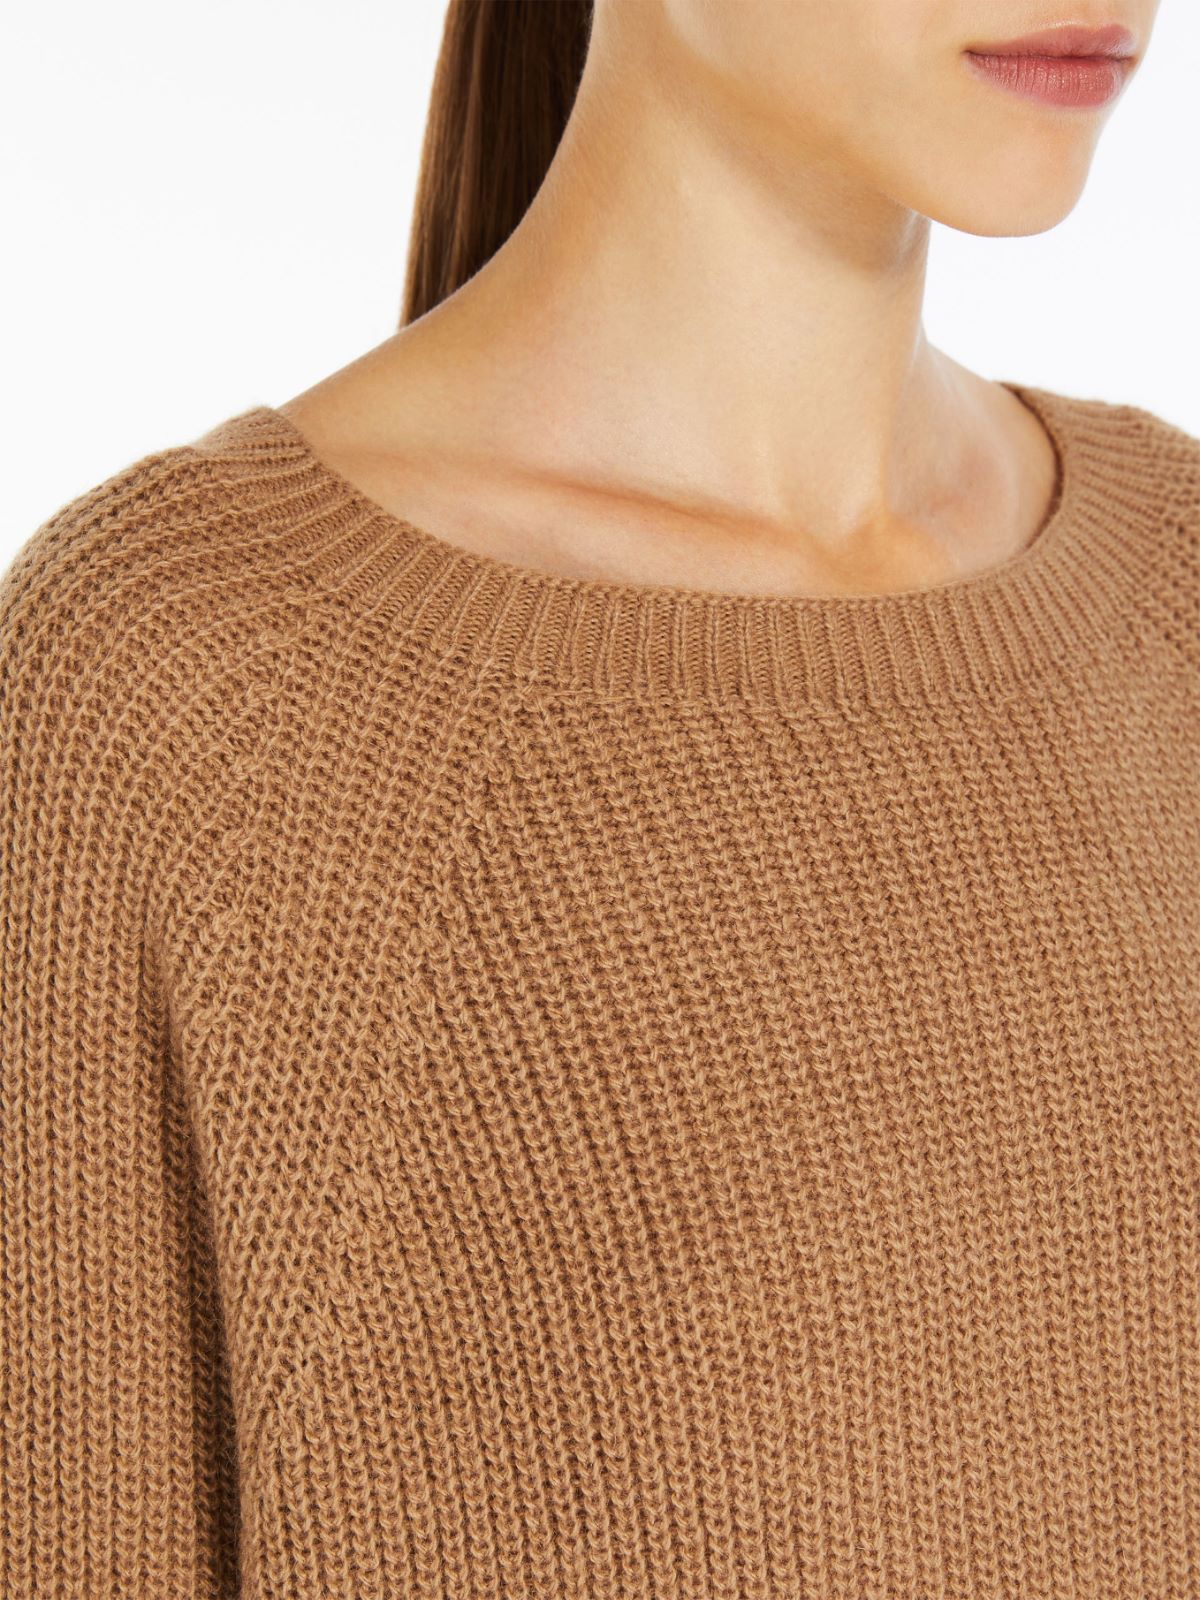 Mohair yarn sweater - CAMEL - Weekend Max Mara - 5